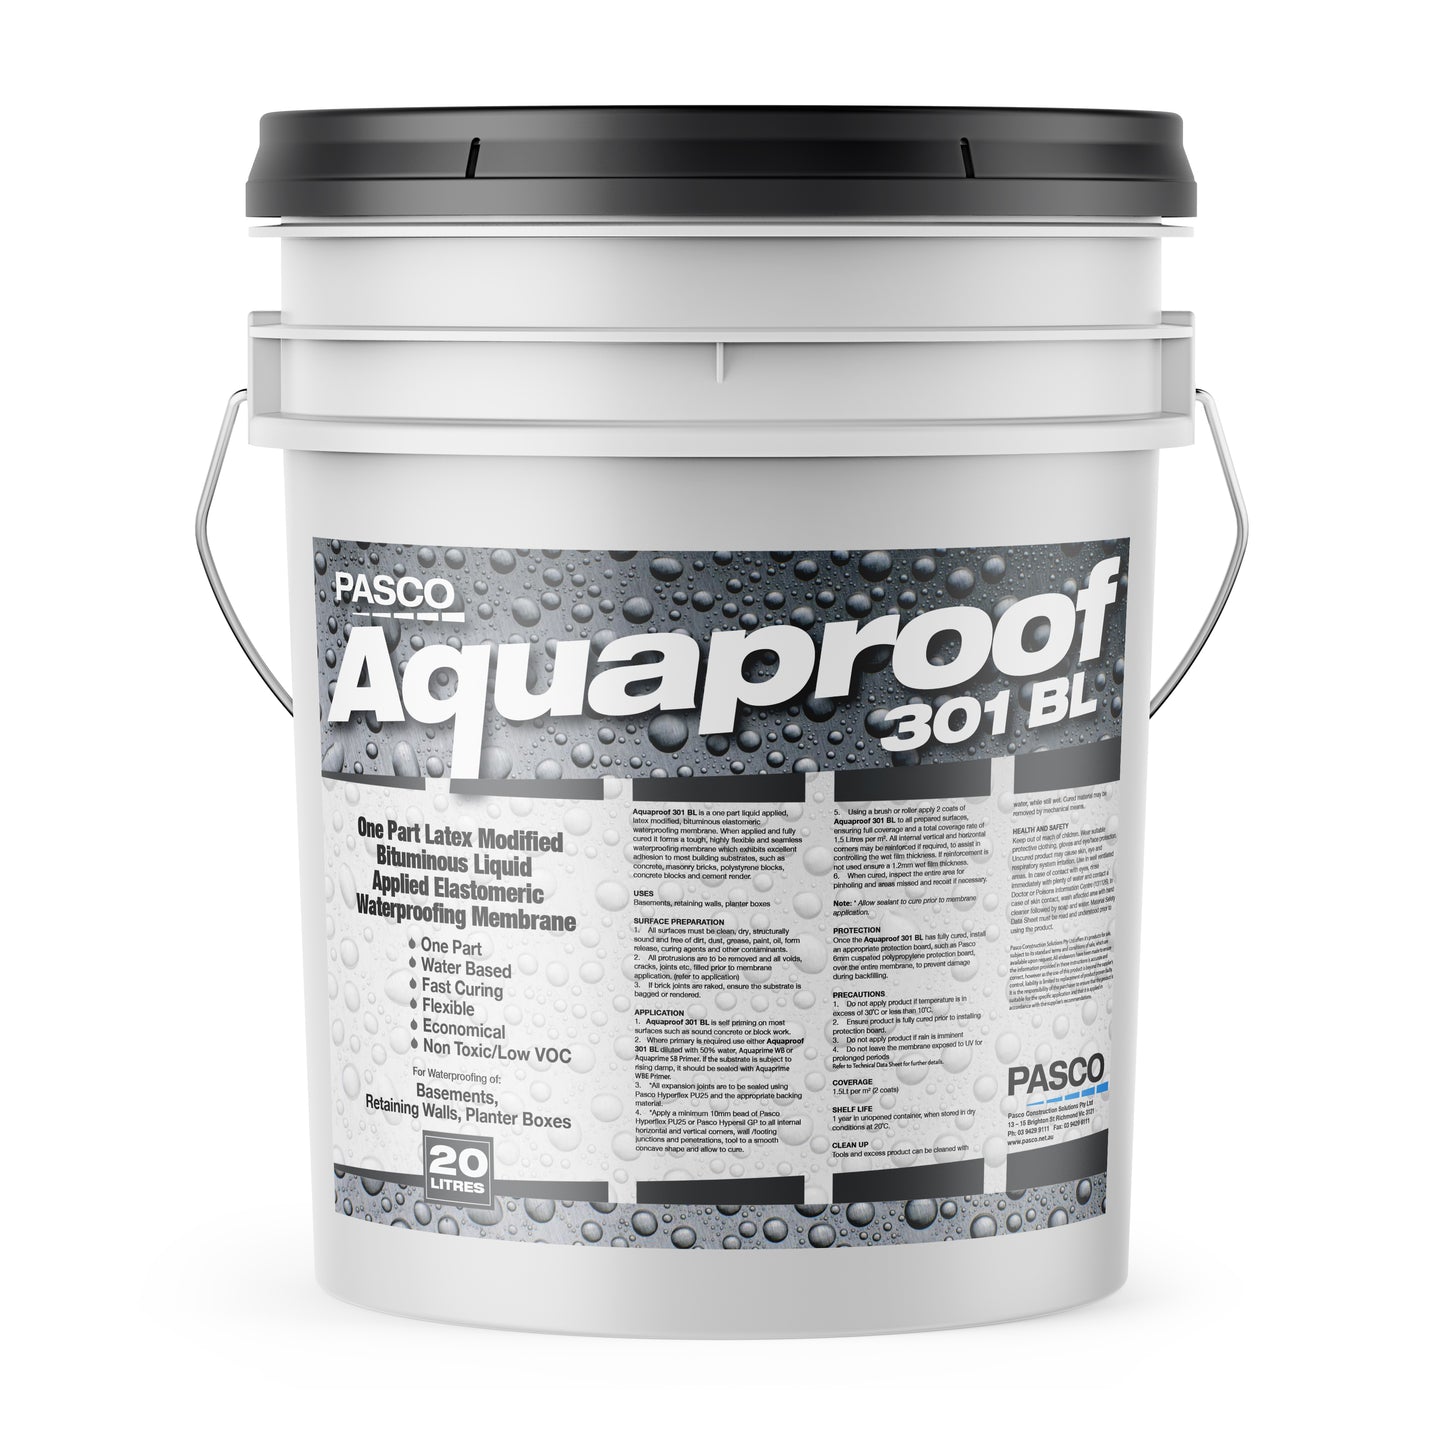 Aquaproof 301 BL